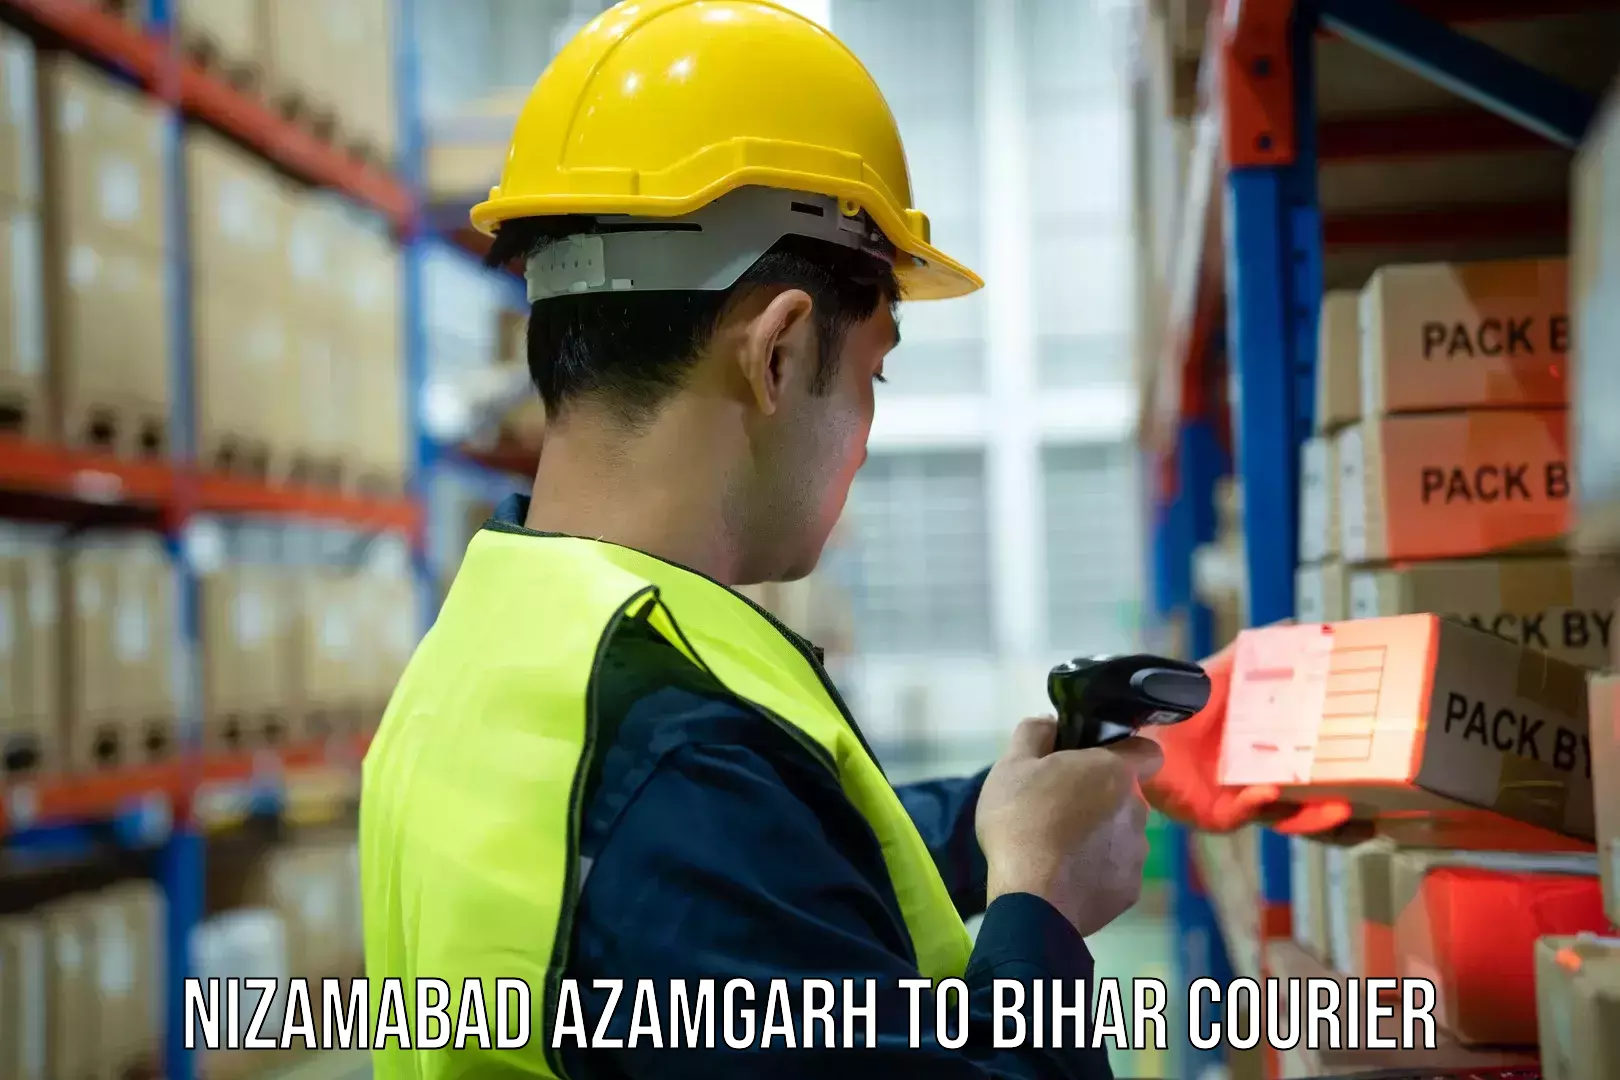 Courier service efficiency Nizamabad Azamgarh to Fatwah